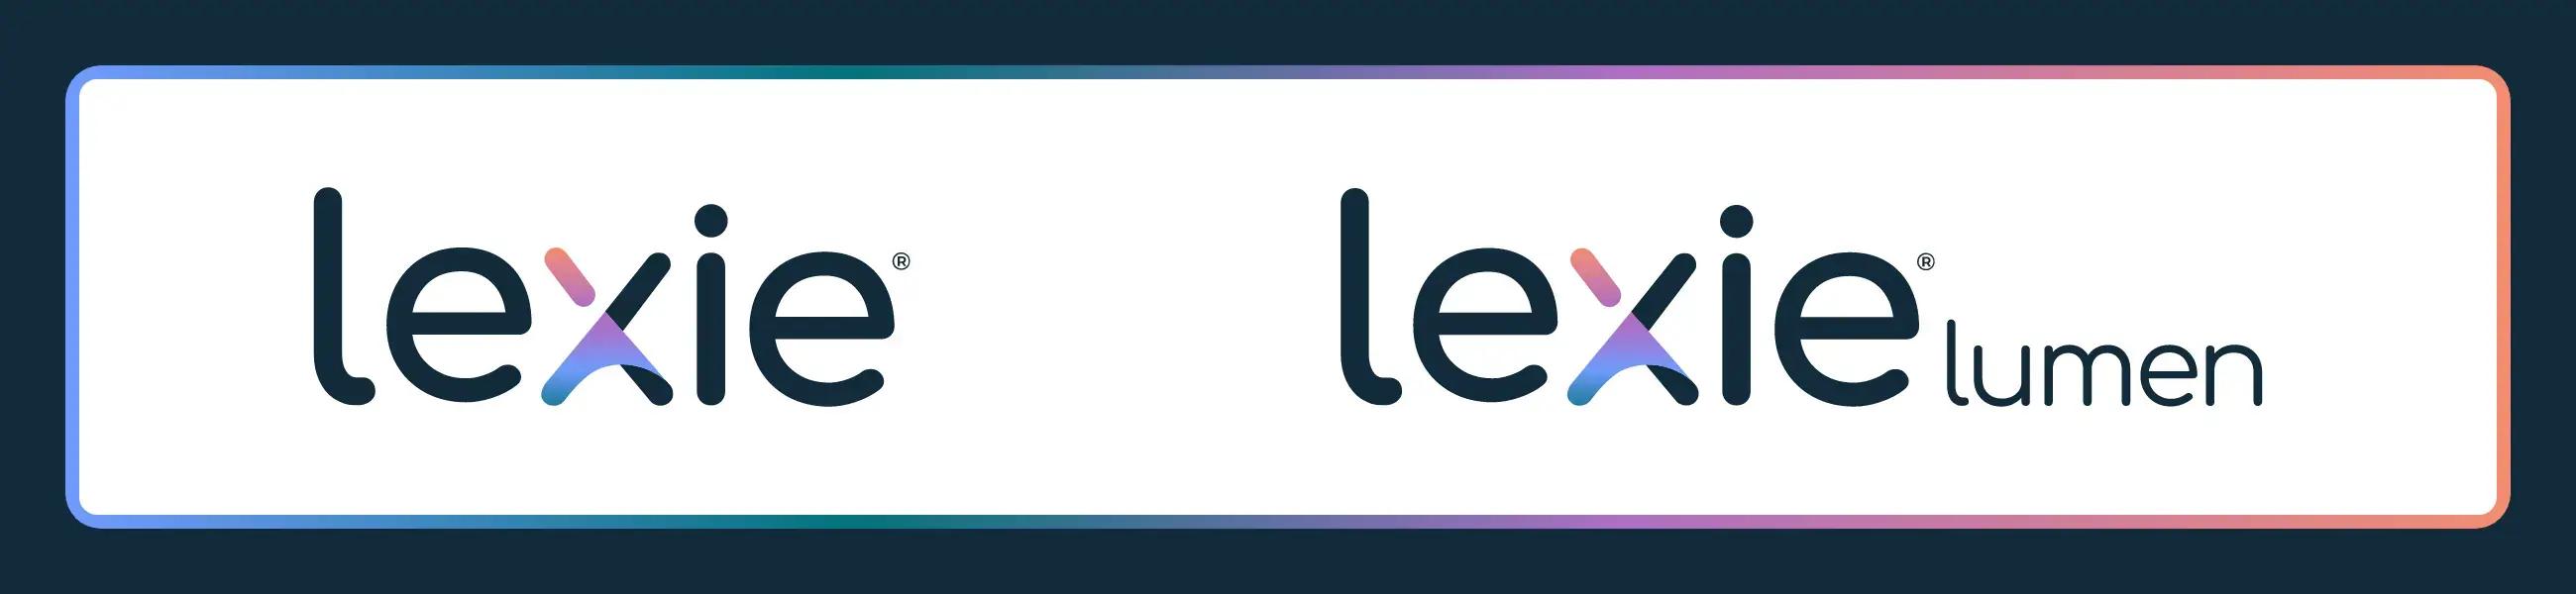 Image of Lexie and Lexie Lumen logo